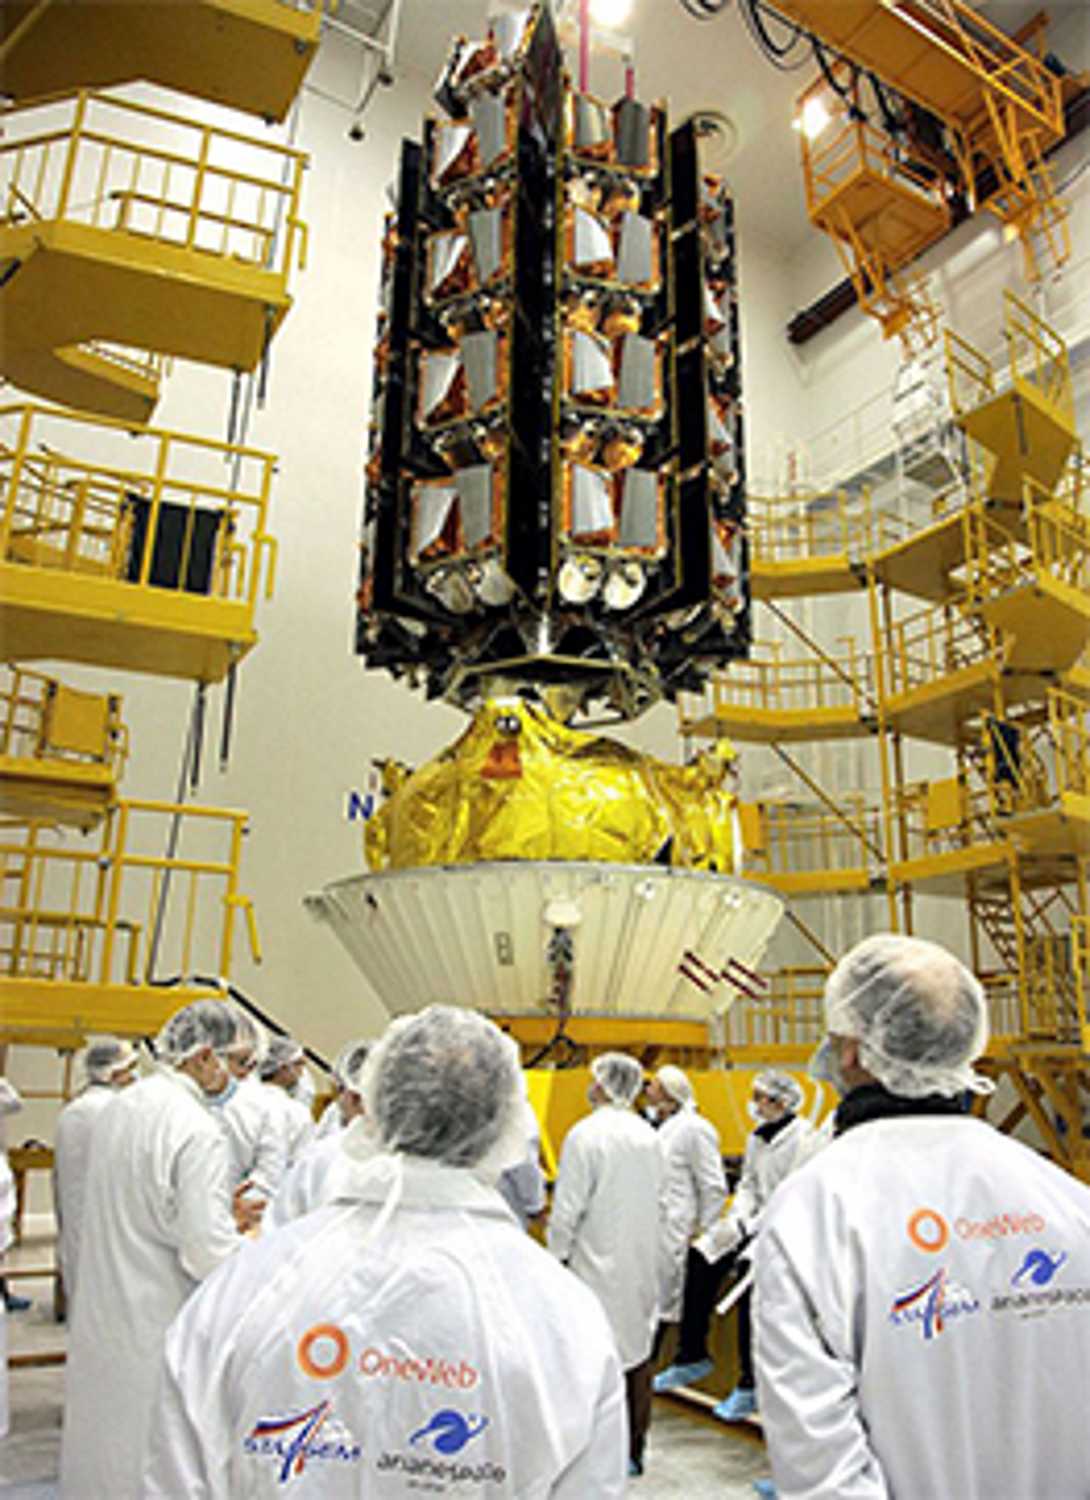 OneWeb – 34 satellites prior to successful launch on 6 Feb 2020<p>
Courtesy Airbus OneWeb Satellites